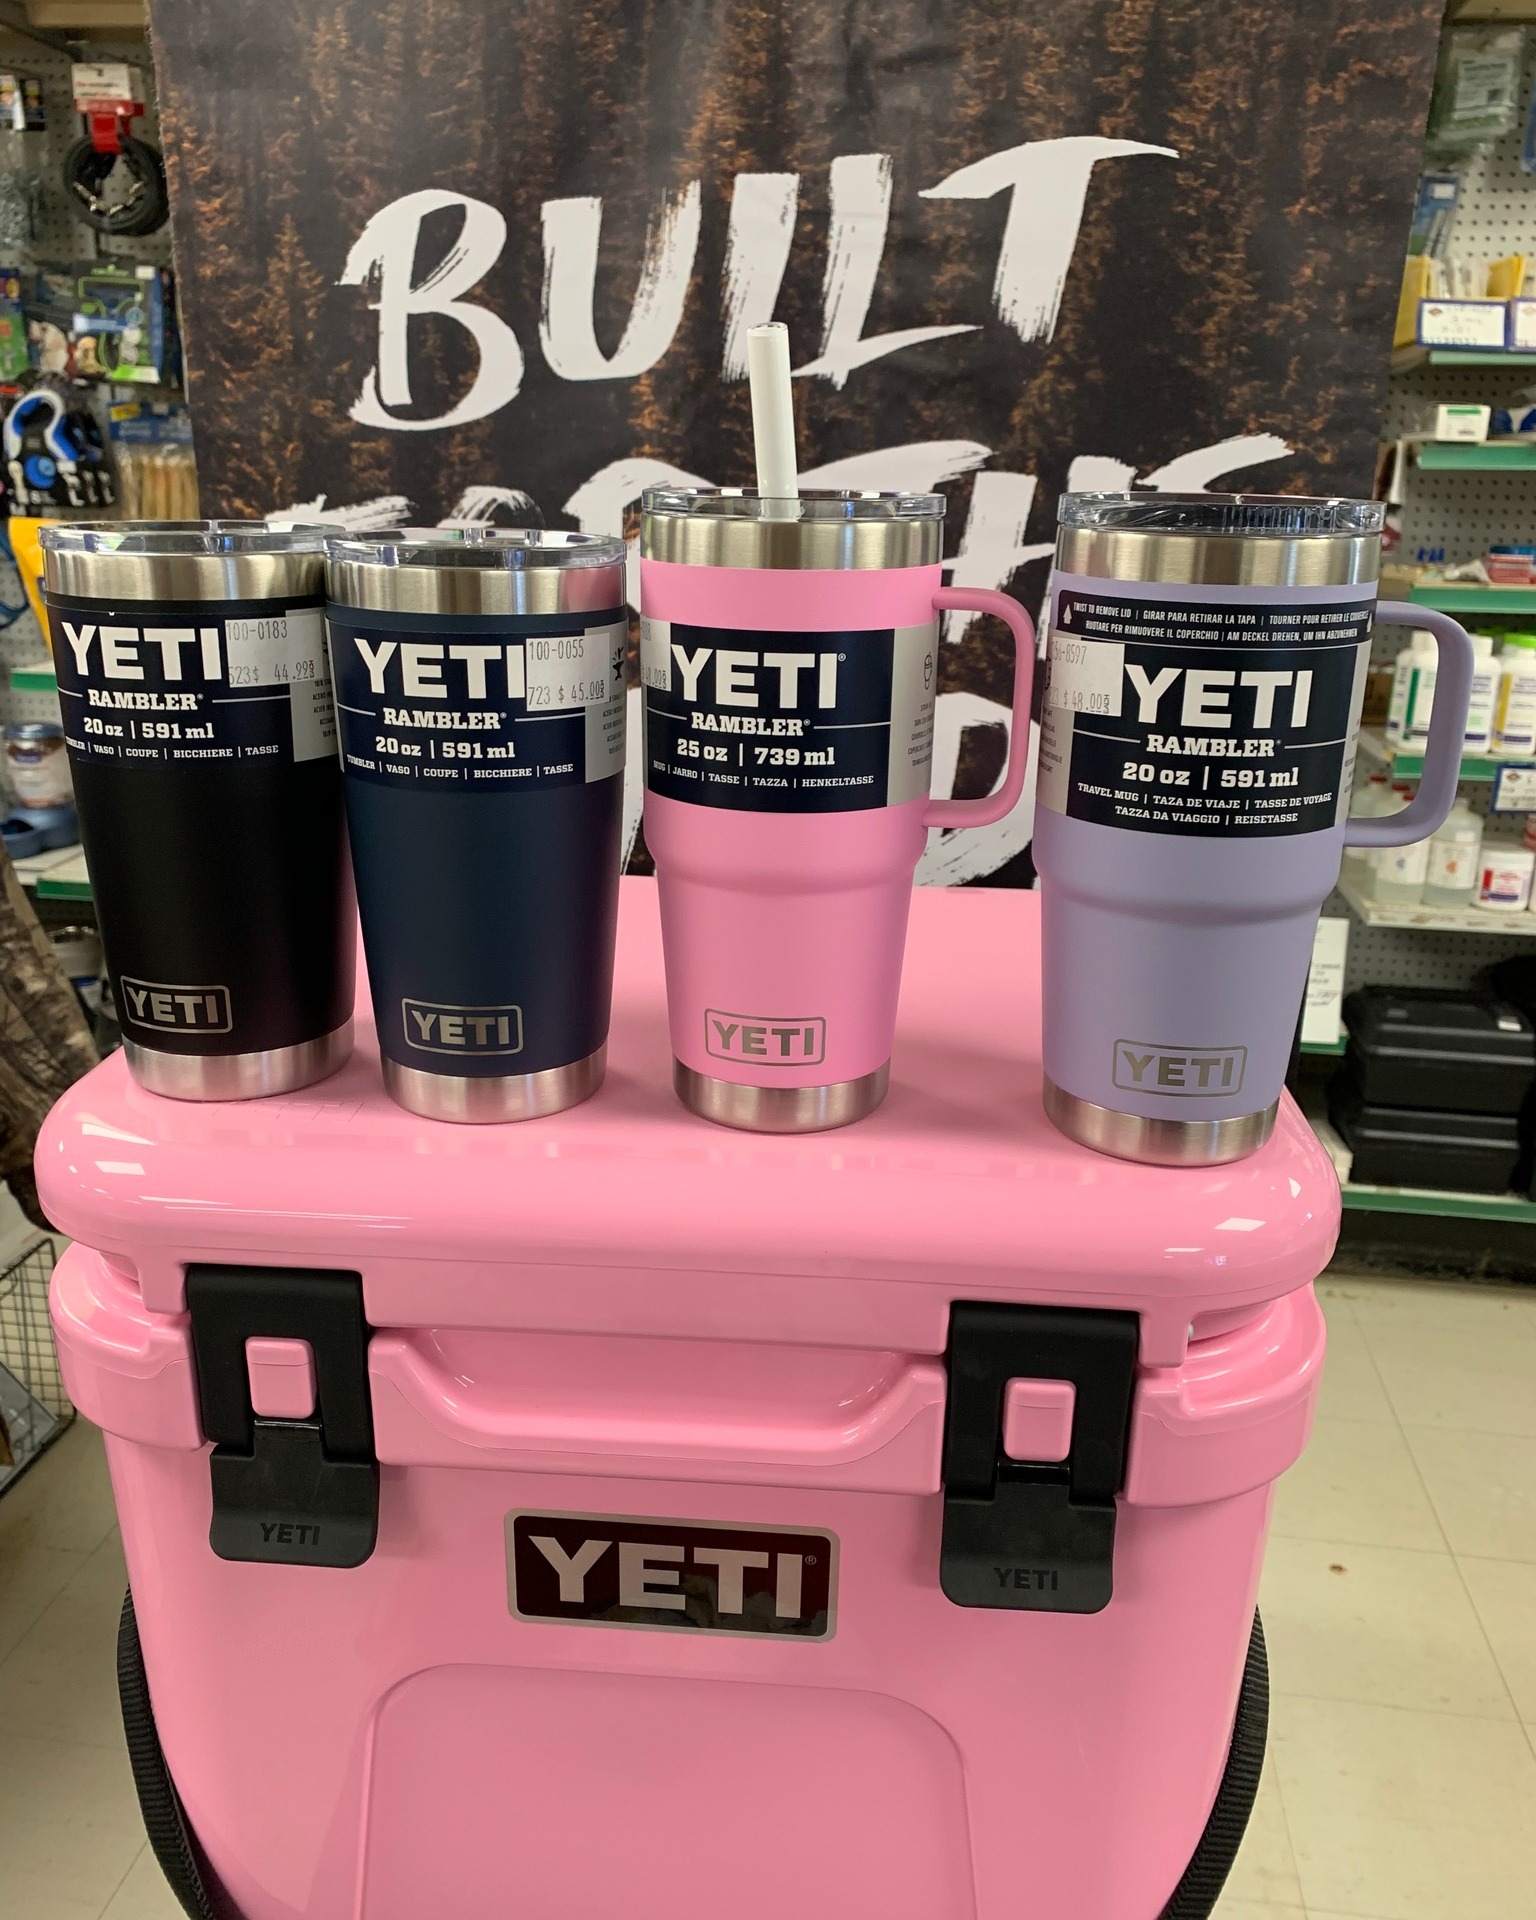 Yeti Products